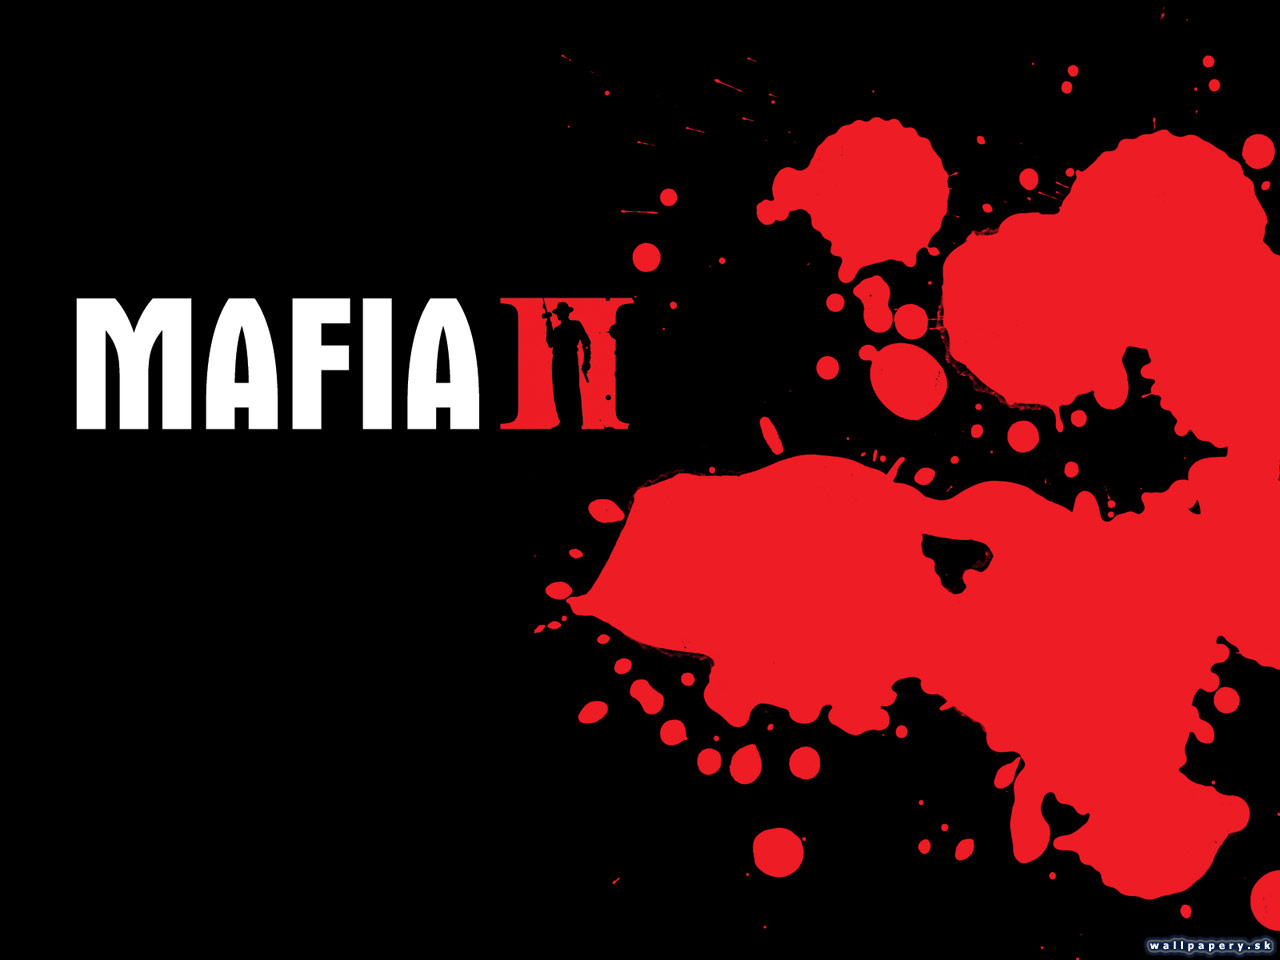 Download High quality Mafia 2 wallpaper / Games / 1280x960